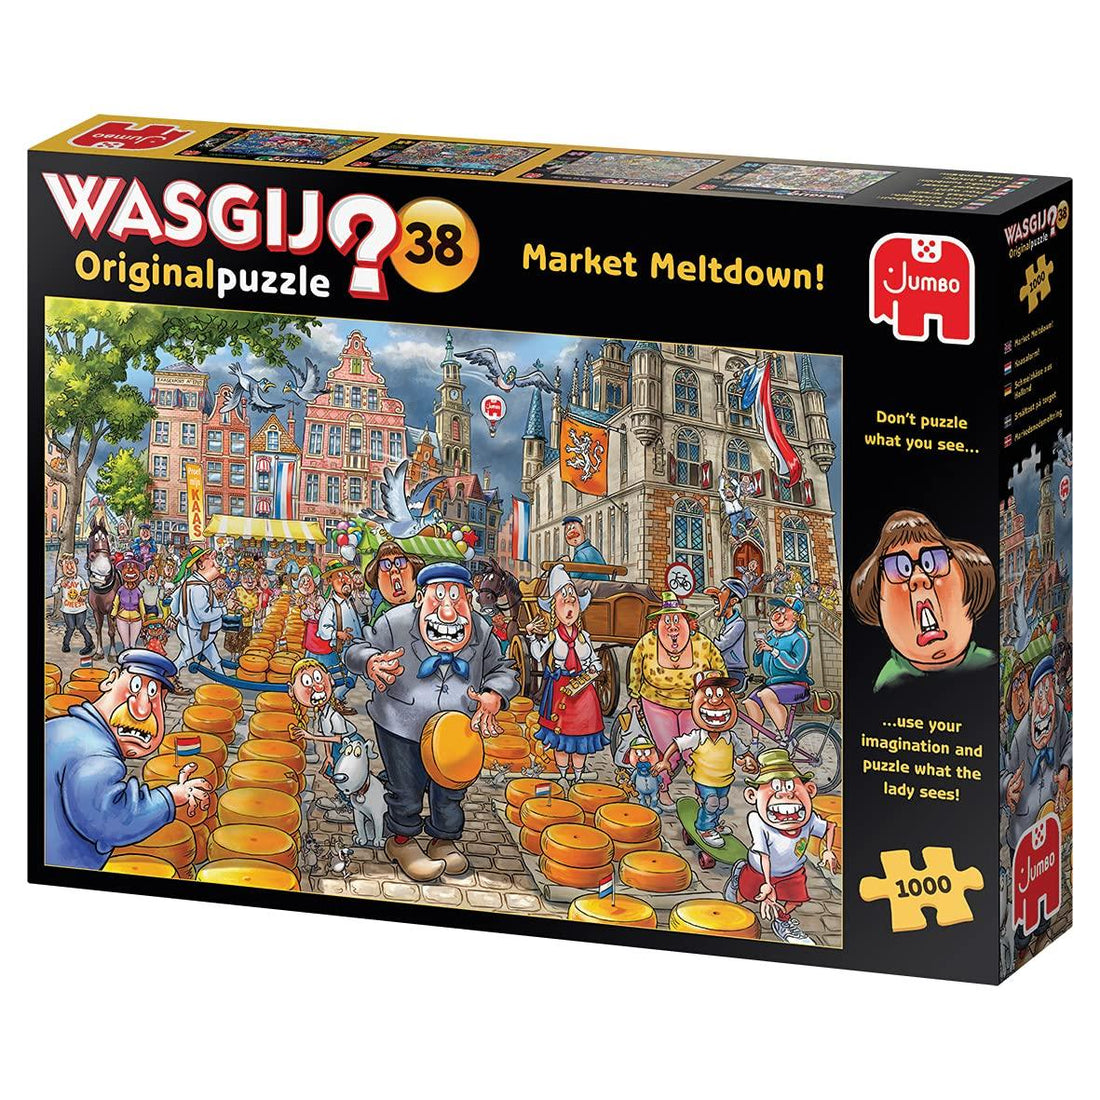 Wasgij Original 38 Market Meltdown, Jigsaw Puzzles for Adults, 1,000 Piece - Kitty Hawk Kites Online Store